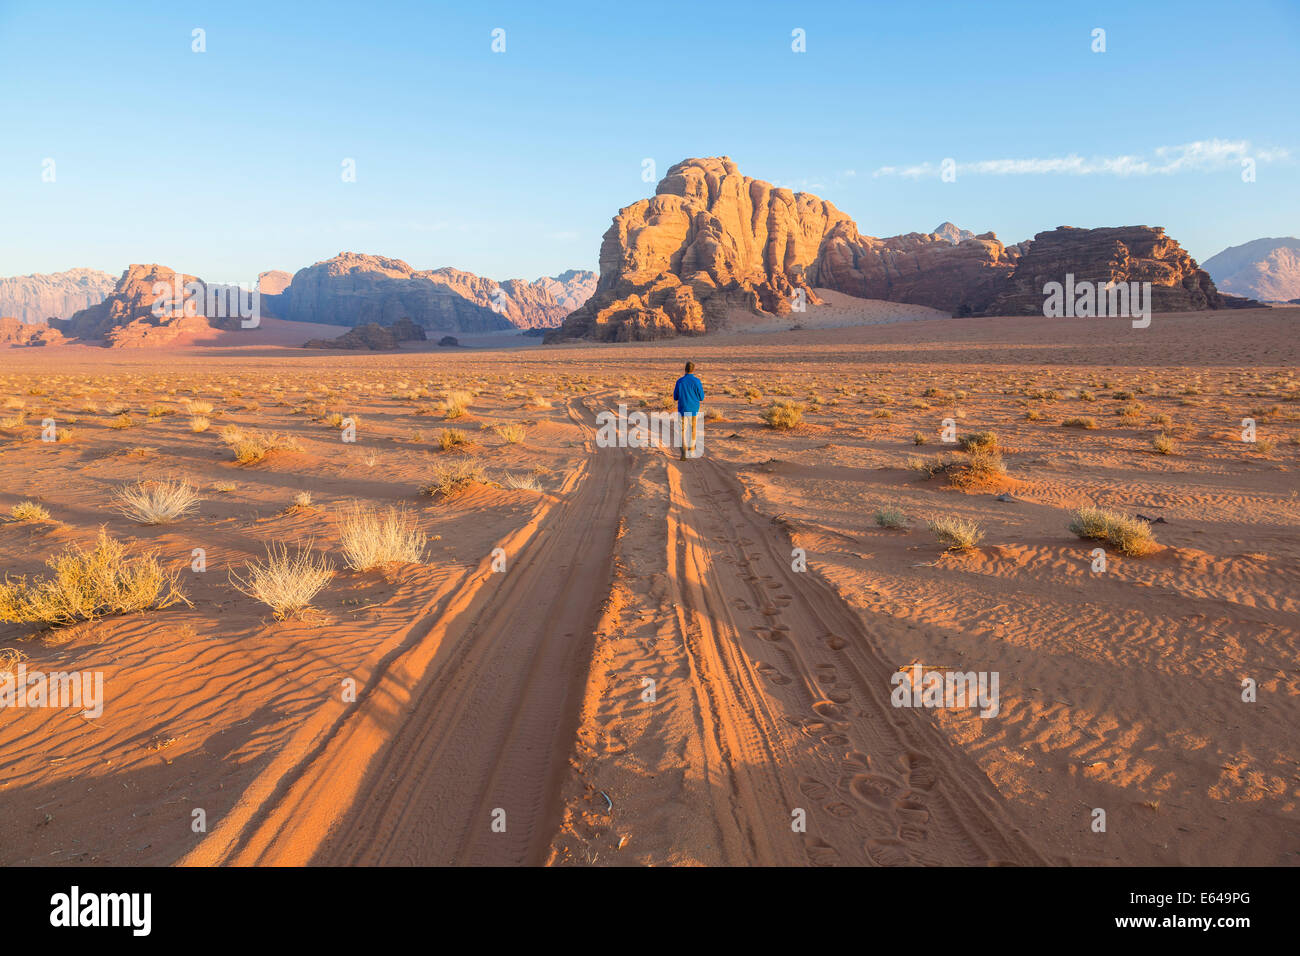 Tracks in the desert, Wadi Rum, Jordan Stock Photo